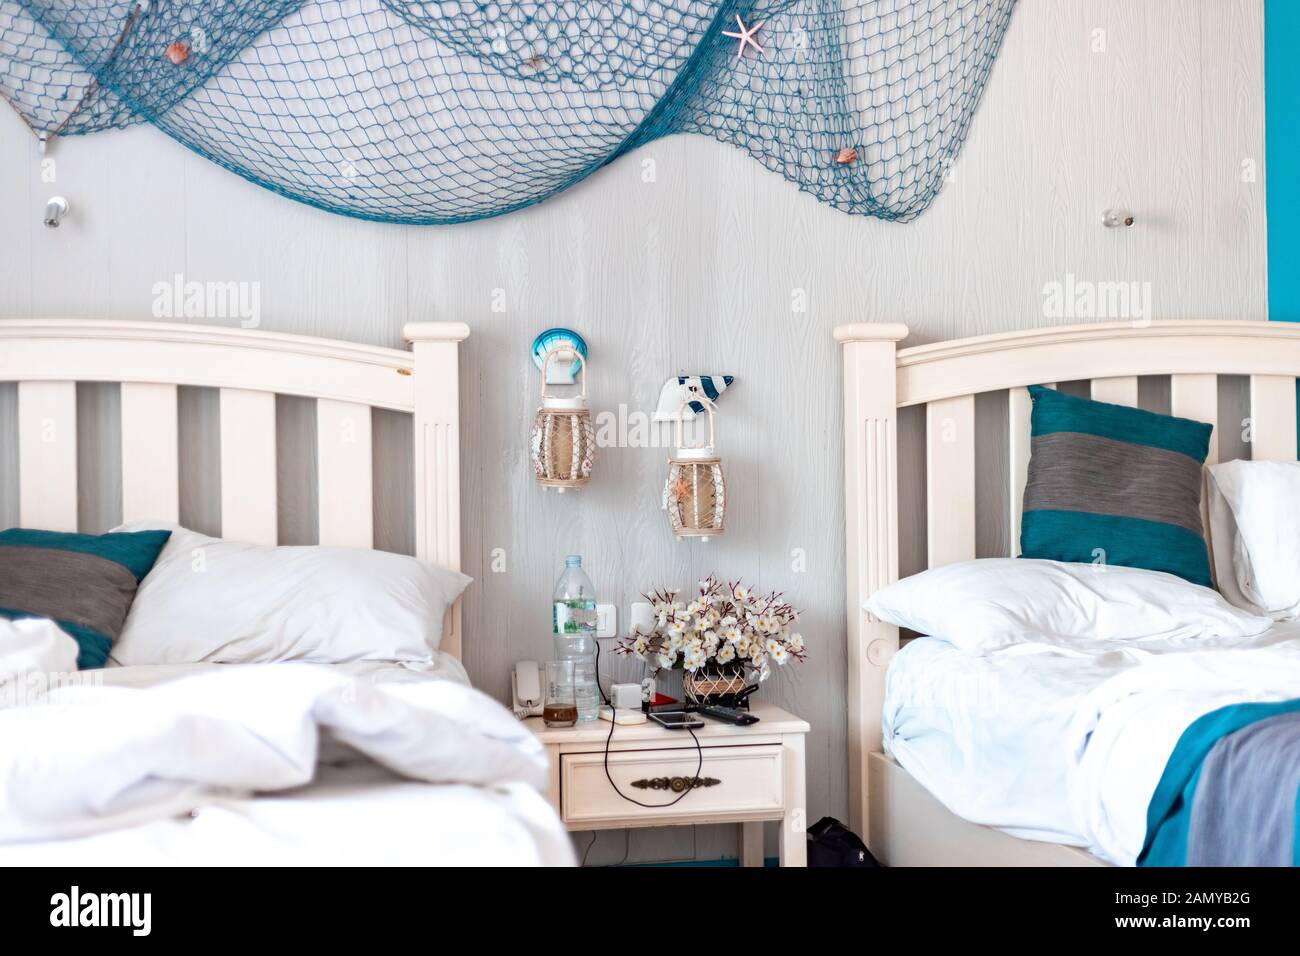 Ropa de cama usada fotografías e imágenes de alta resolución - Alamy